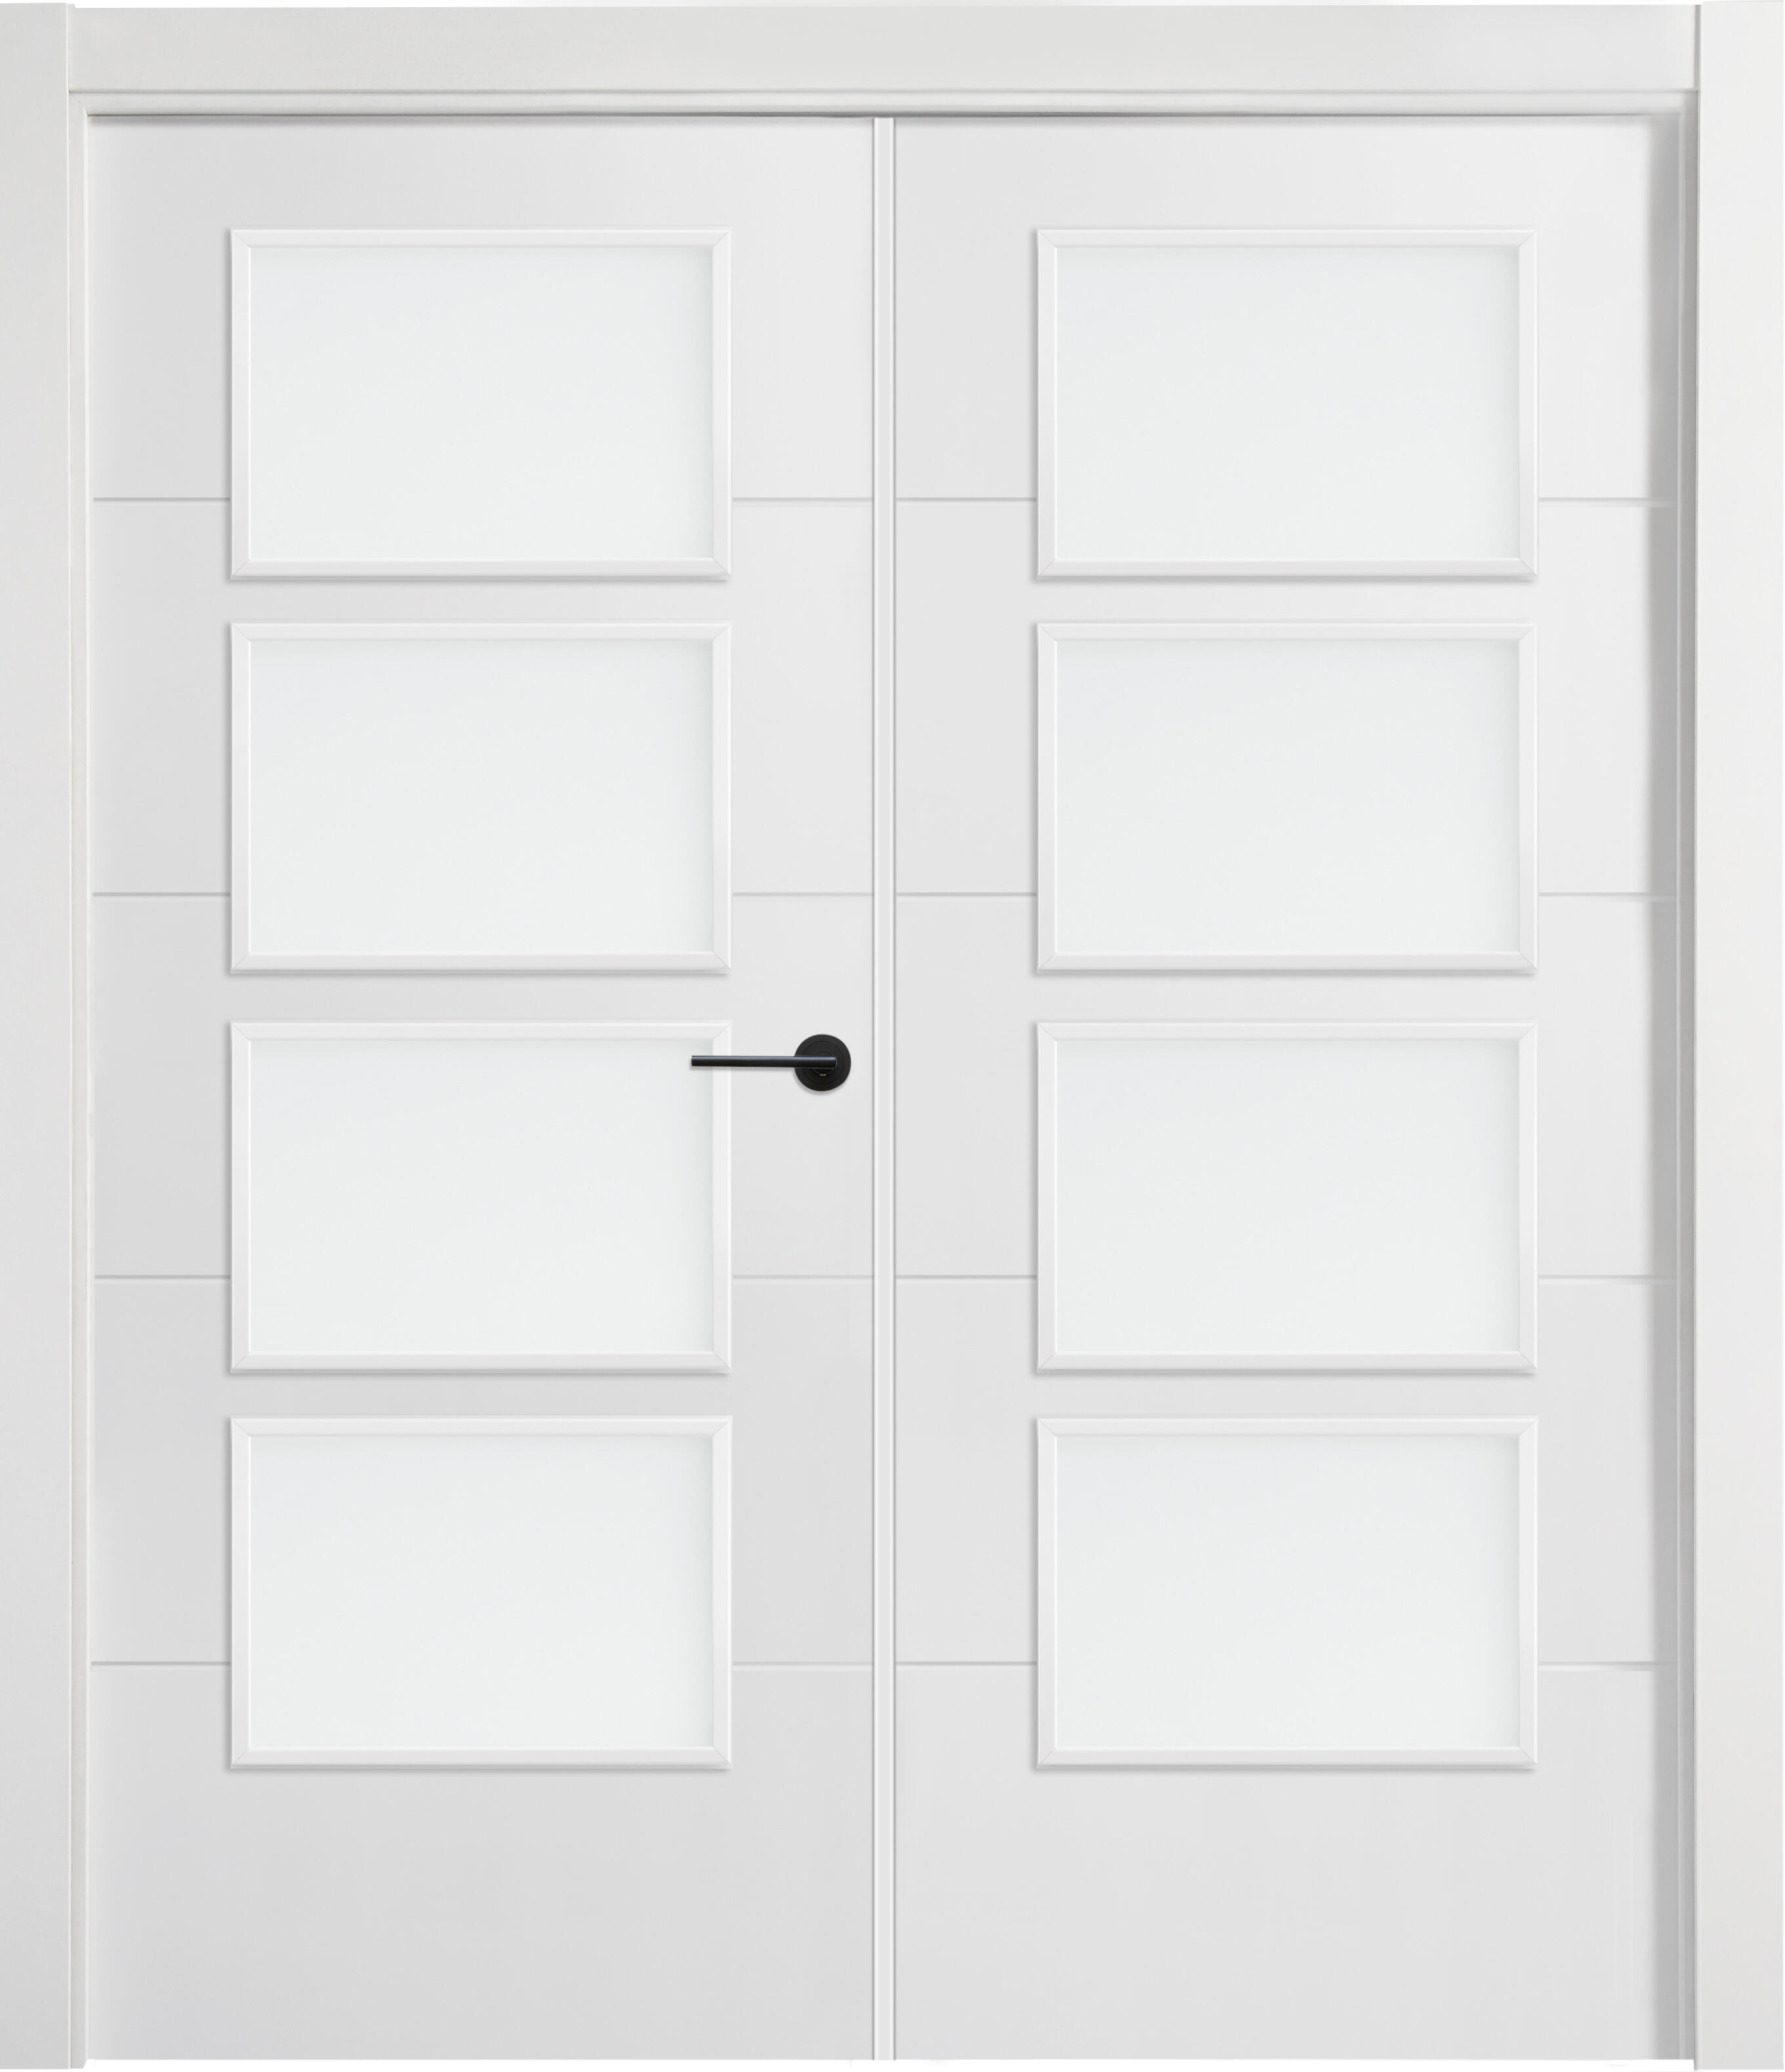 Puerta lucerna plus black blanco de apertura izquierda con cristal 145 cm